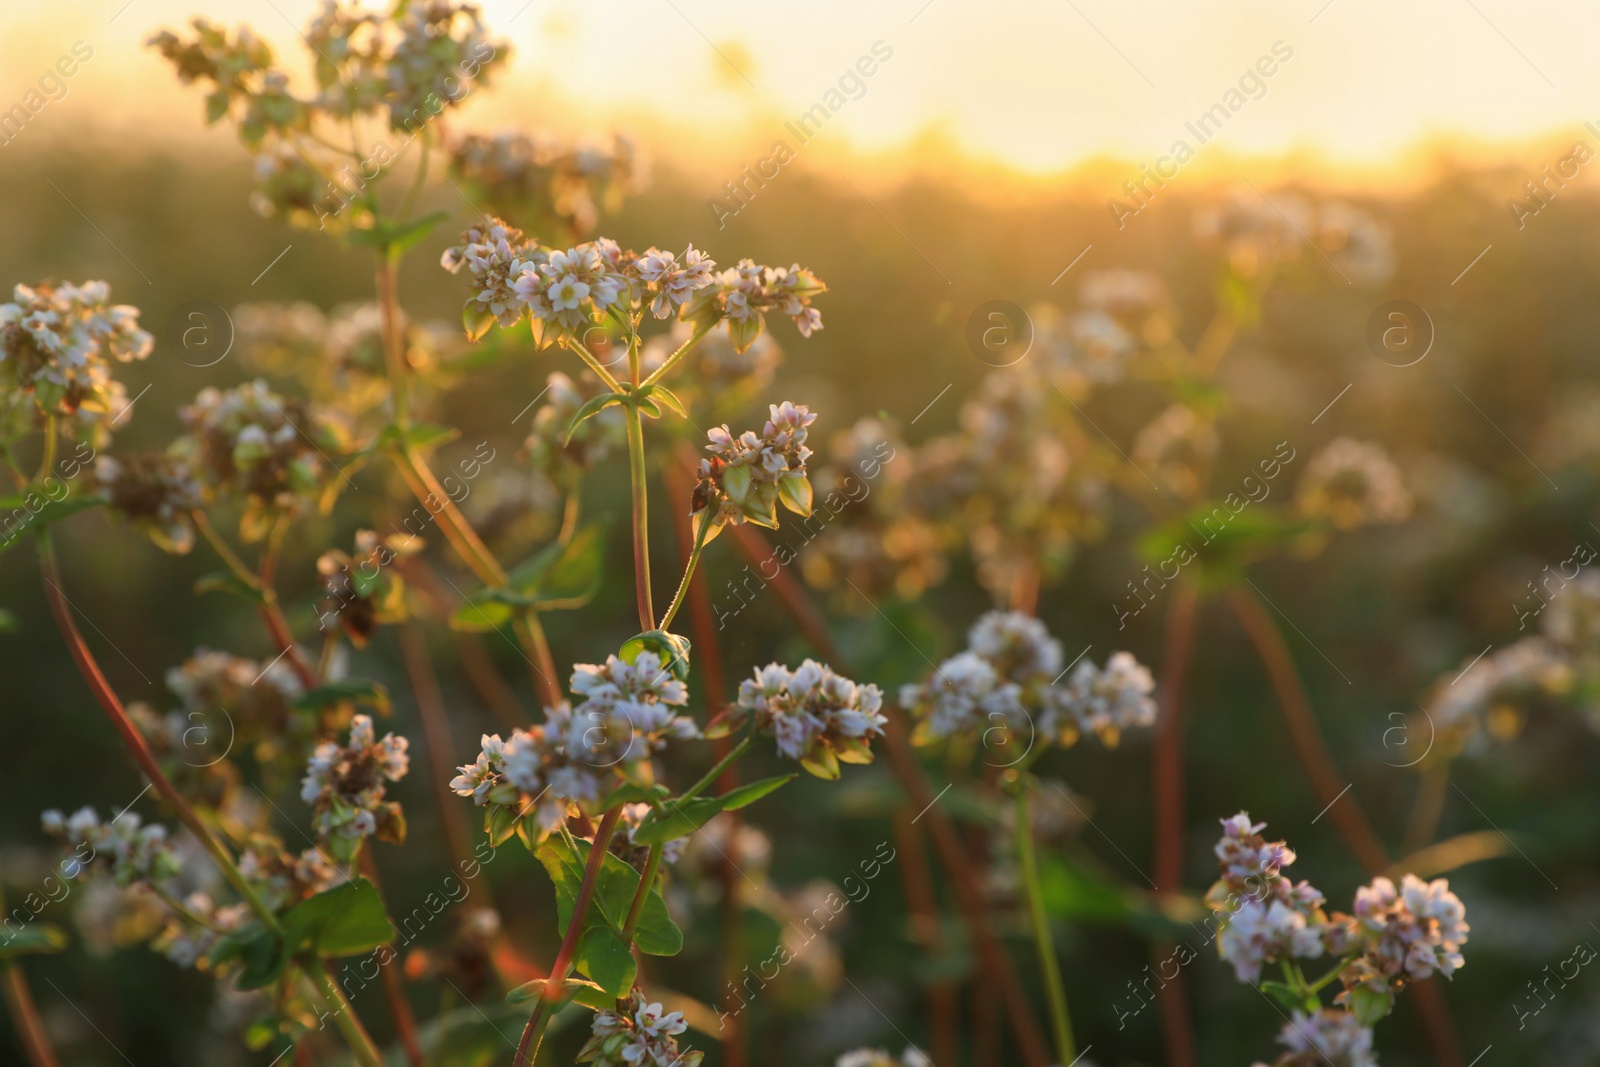 Photo of Many beautiful buckwheat flowers growing in field, closeup